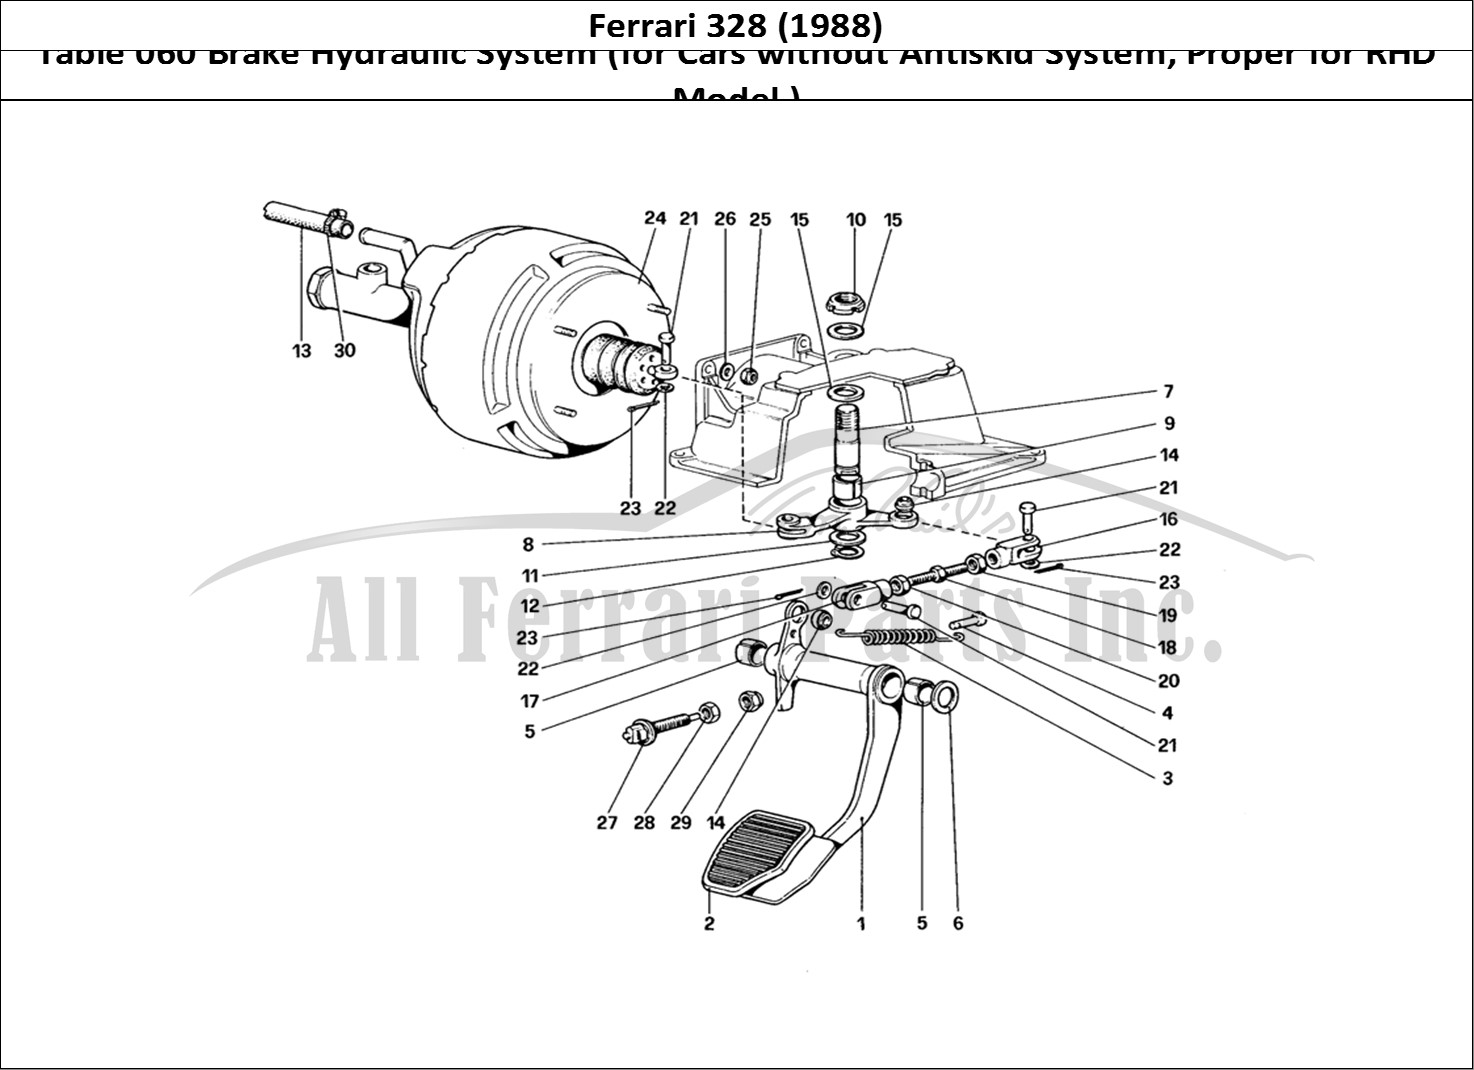 Ferrari Parts Ferrari 328 (1988) Page 060 Brake Hydraulic System (f